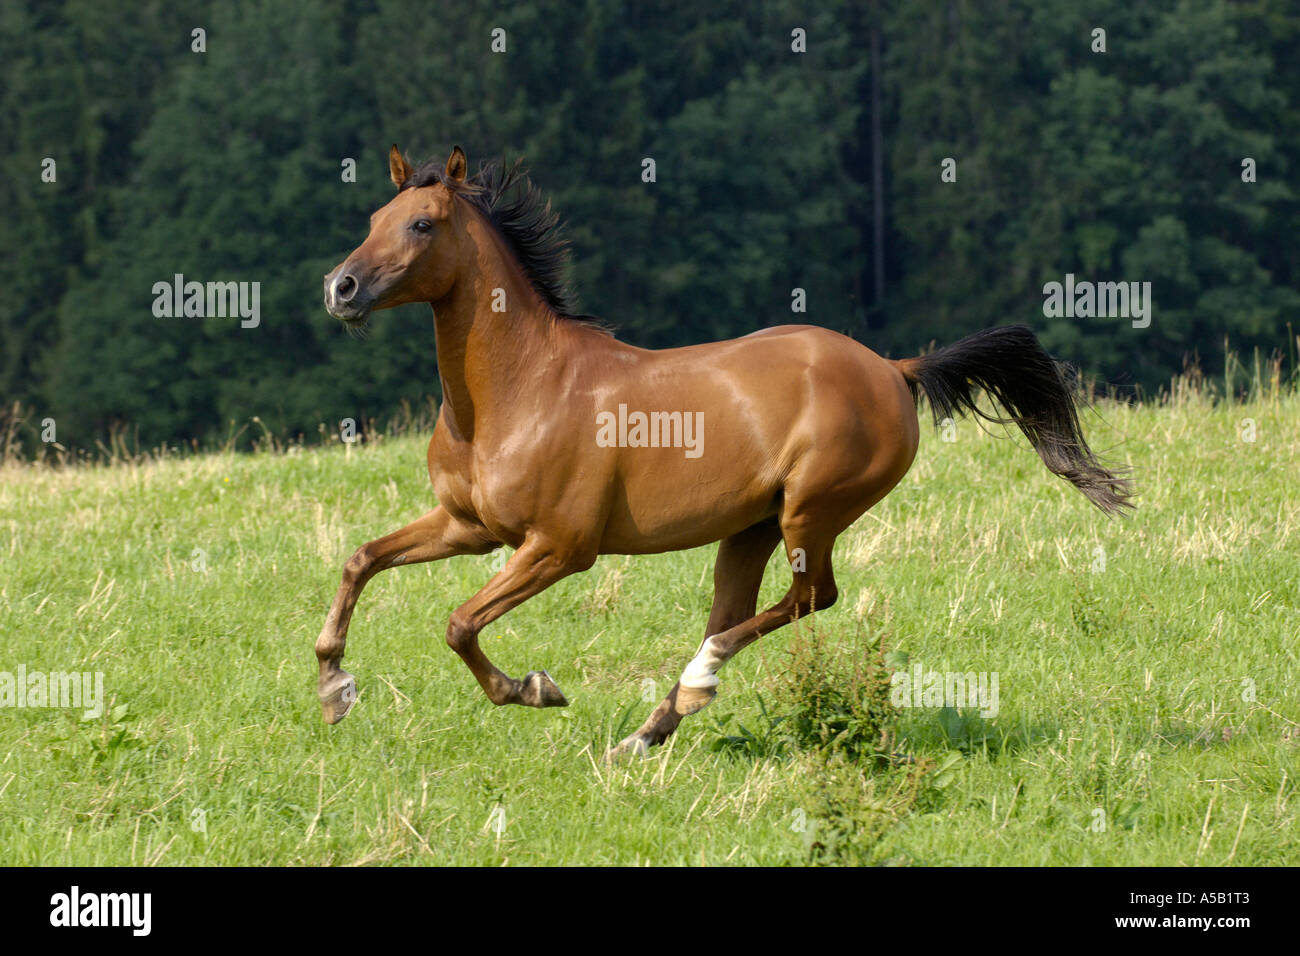 Arabian horse galloping Stock Photo